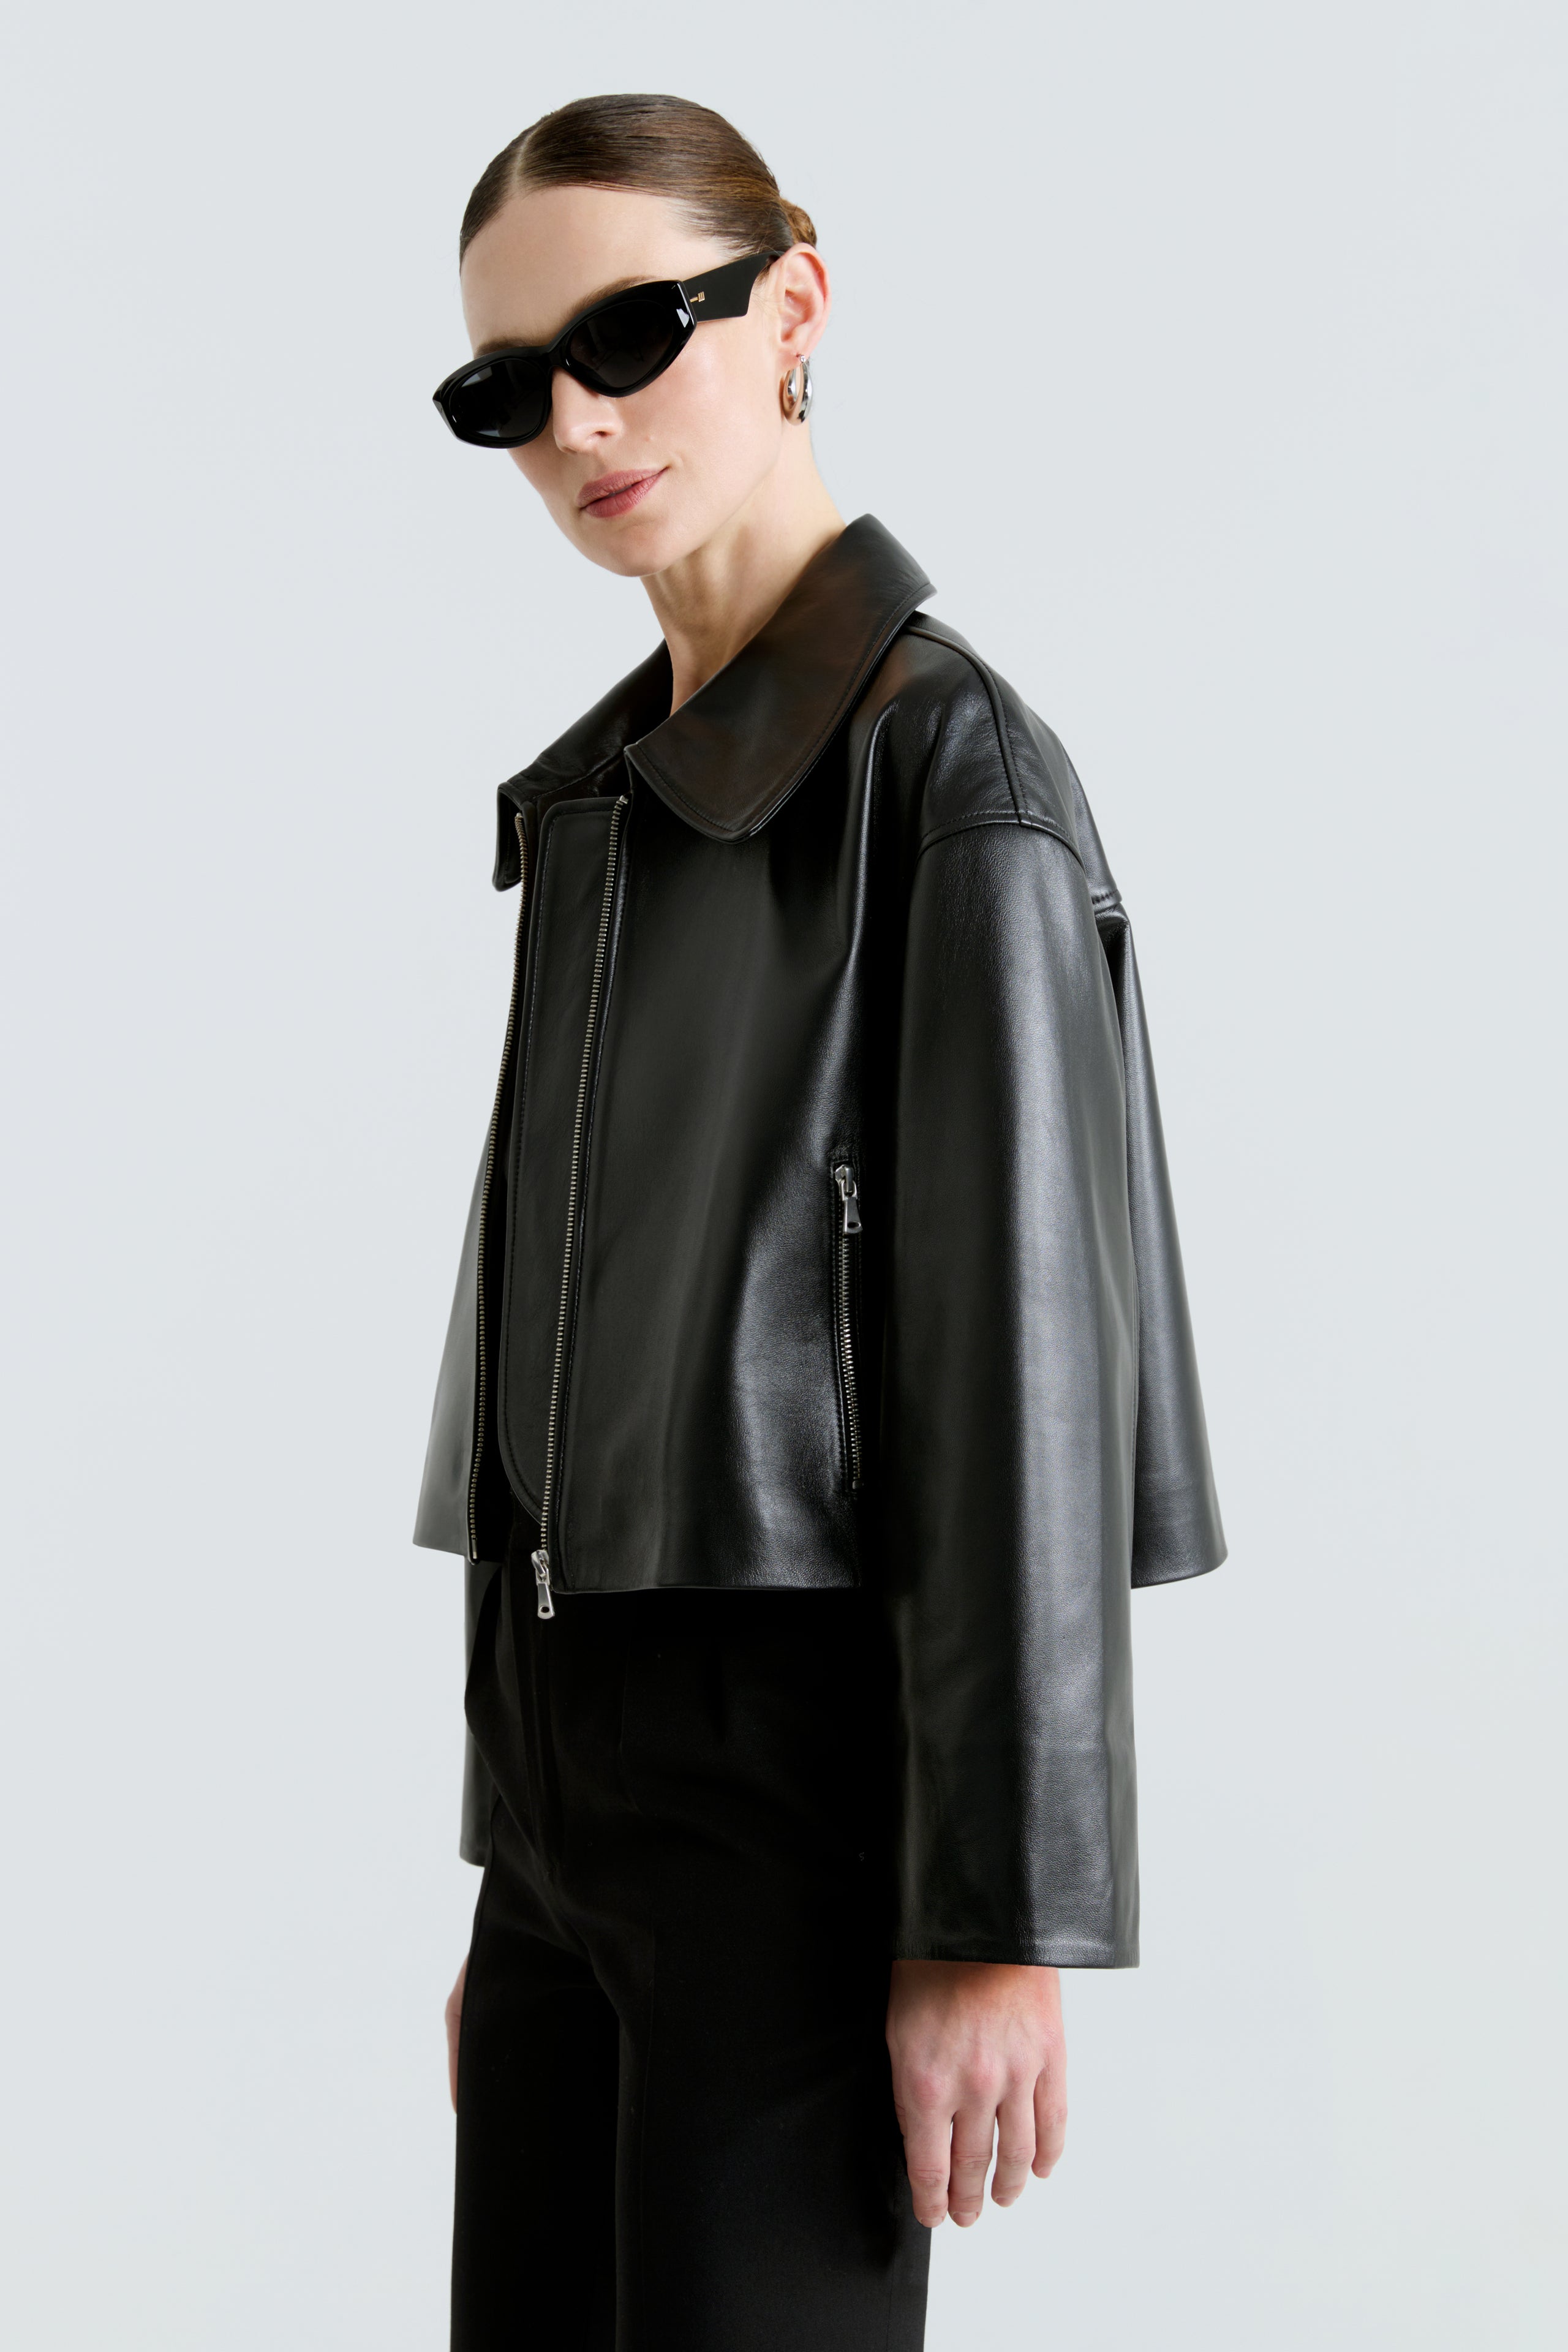 Model is wearing the Sloan Black Minimalist Leather Jacket Close Up